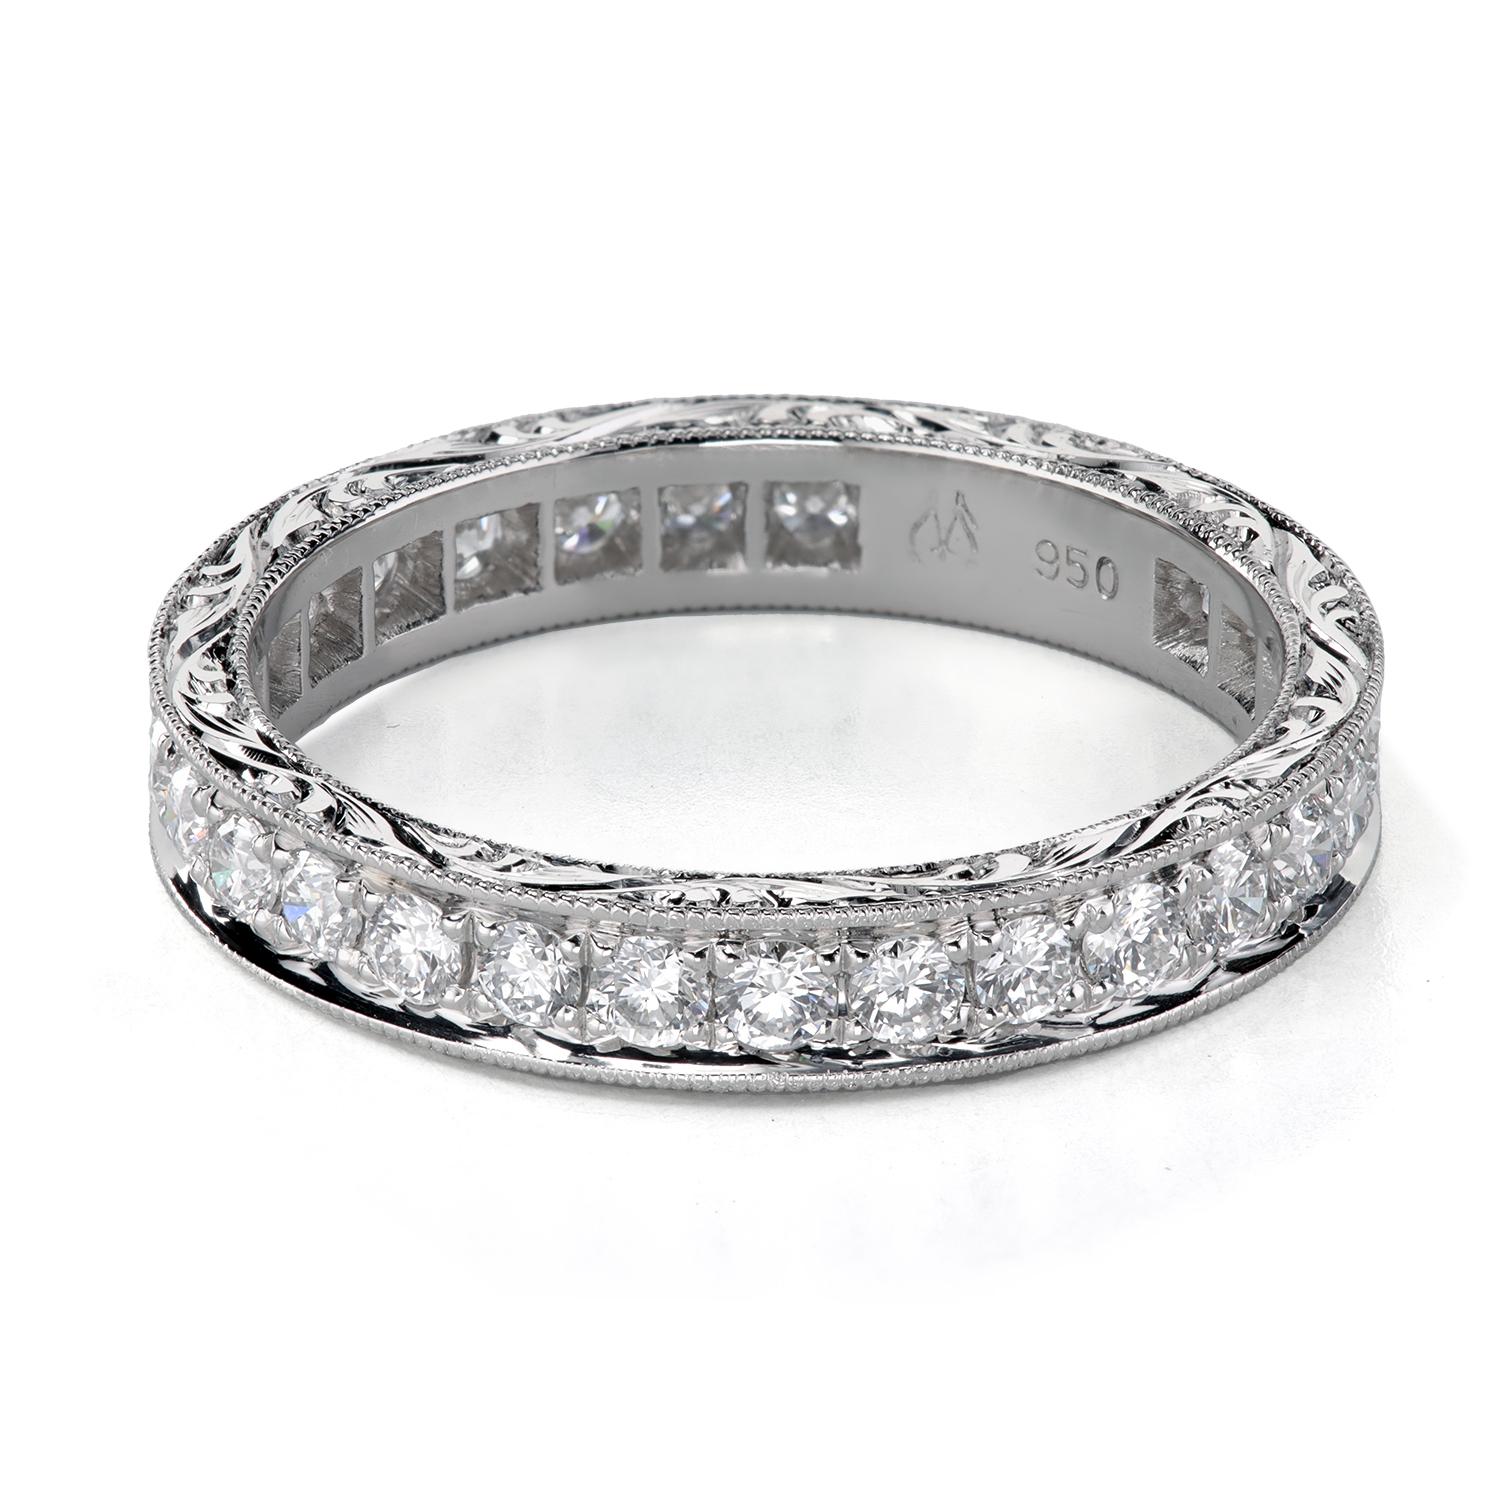 Art Deco style Leon Megé exquisite 101™ wedding band with eternity-set ideal-cut diamonds.

Decorative engraving is done by hand
Hand-pierced ajour
Bright-cut diamond pave
Millgrain edge